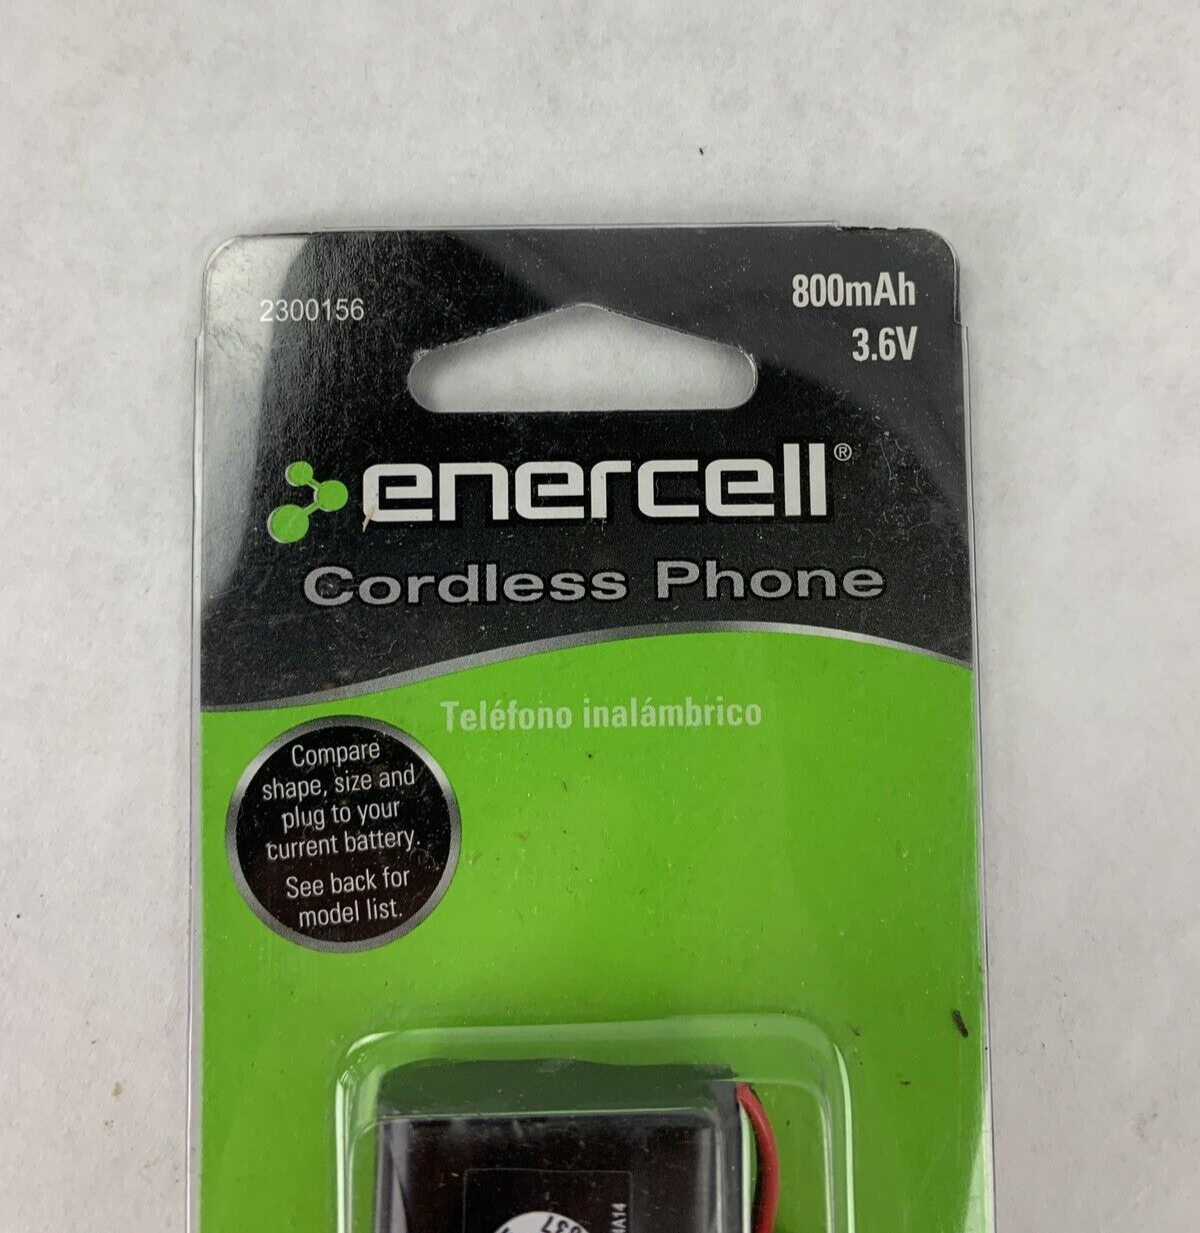 New Enercell 800mAh Cordless Phone Battery 3.6 Volt 2300156